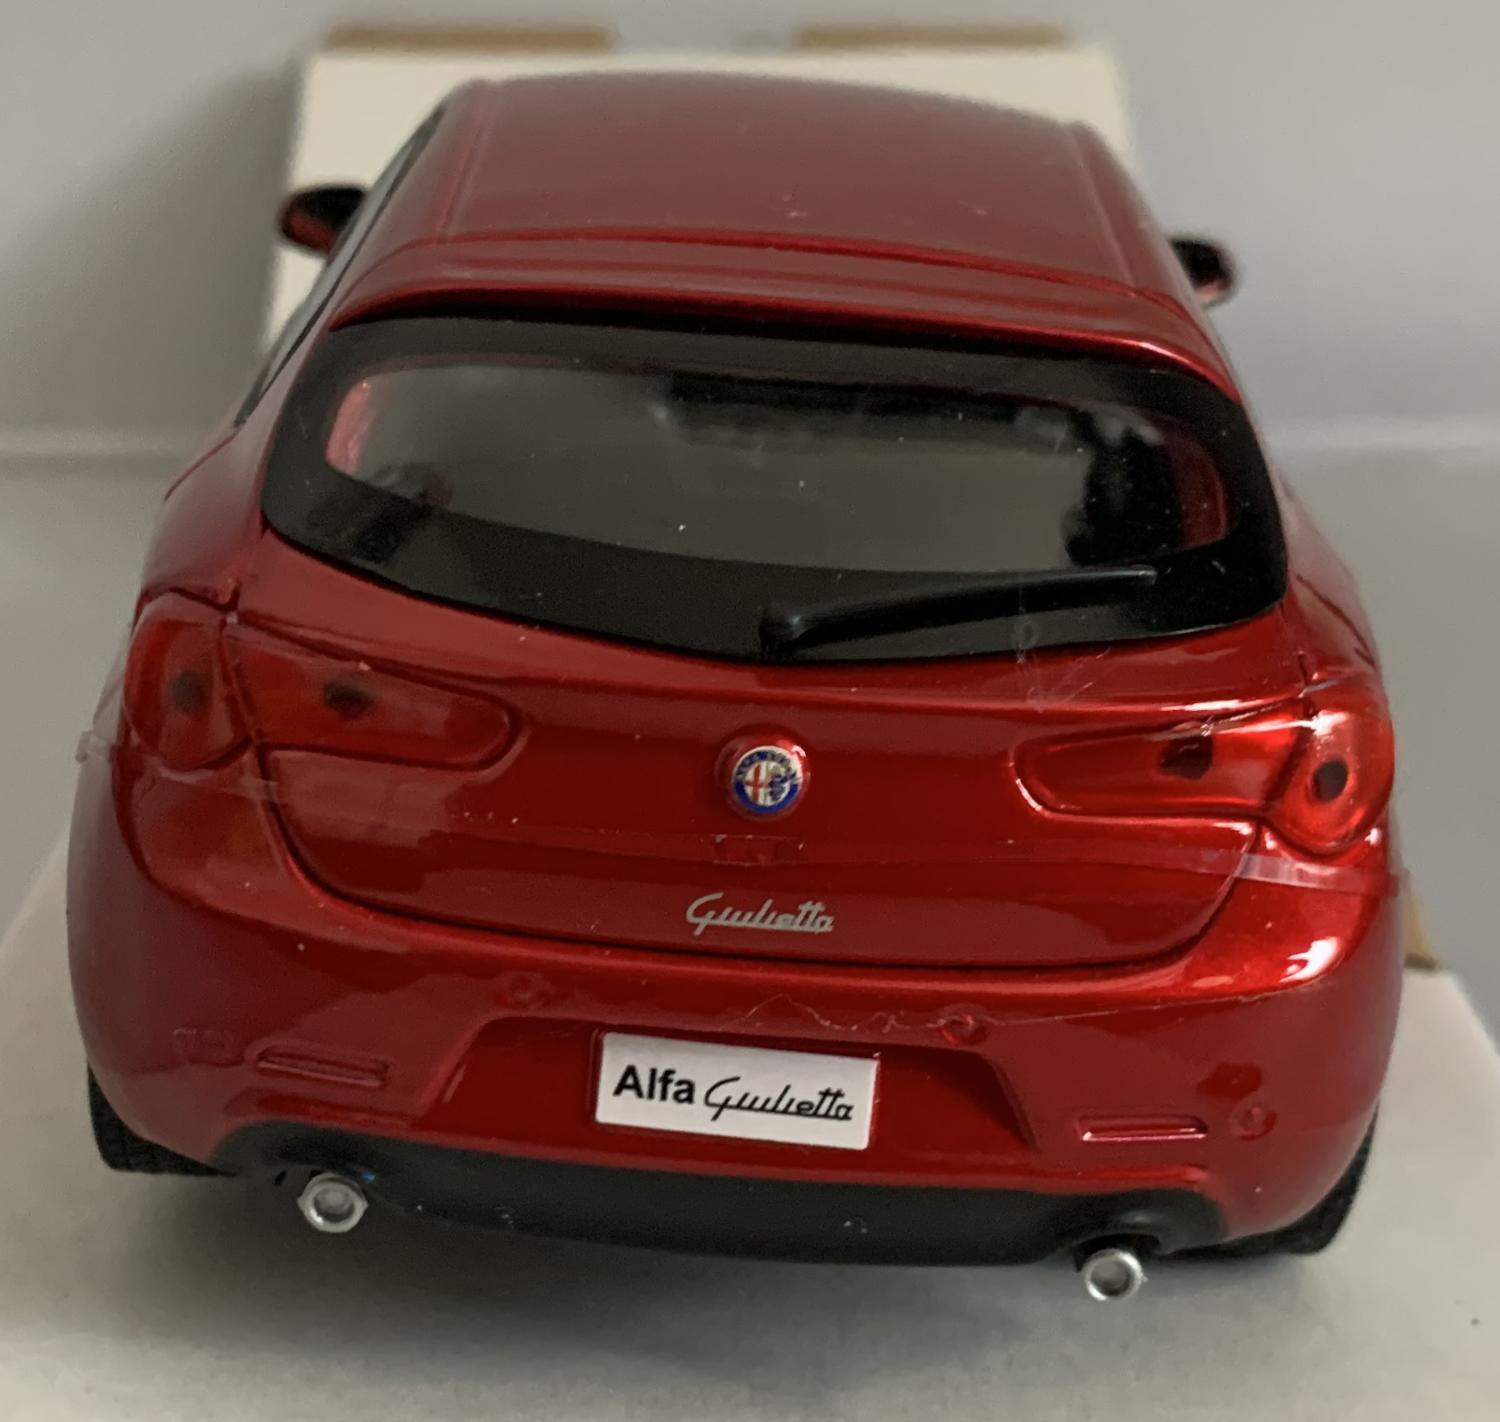 Alfa Romeo Giulietta in metallic red 1:24 scale model from Bburago